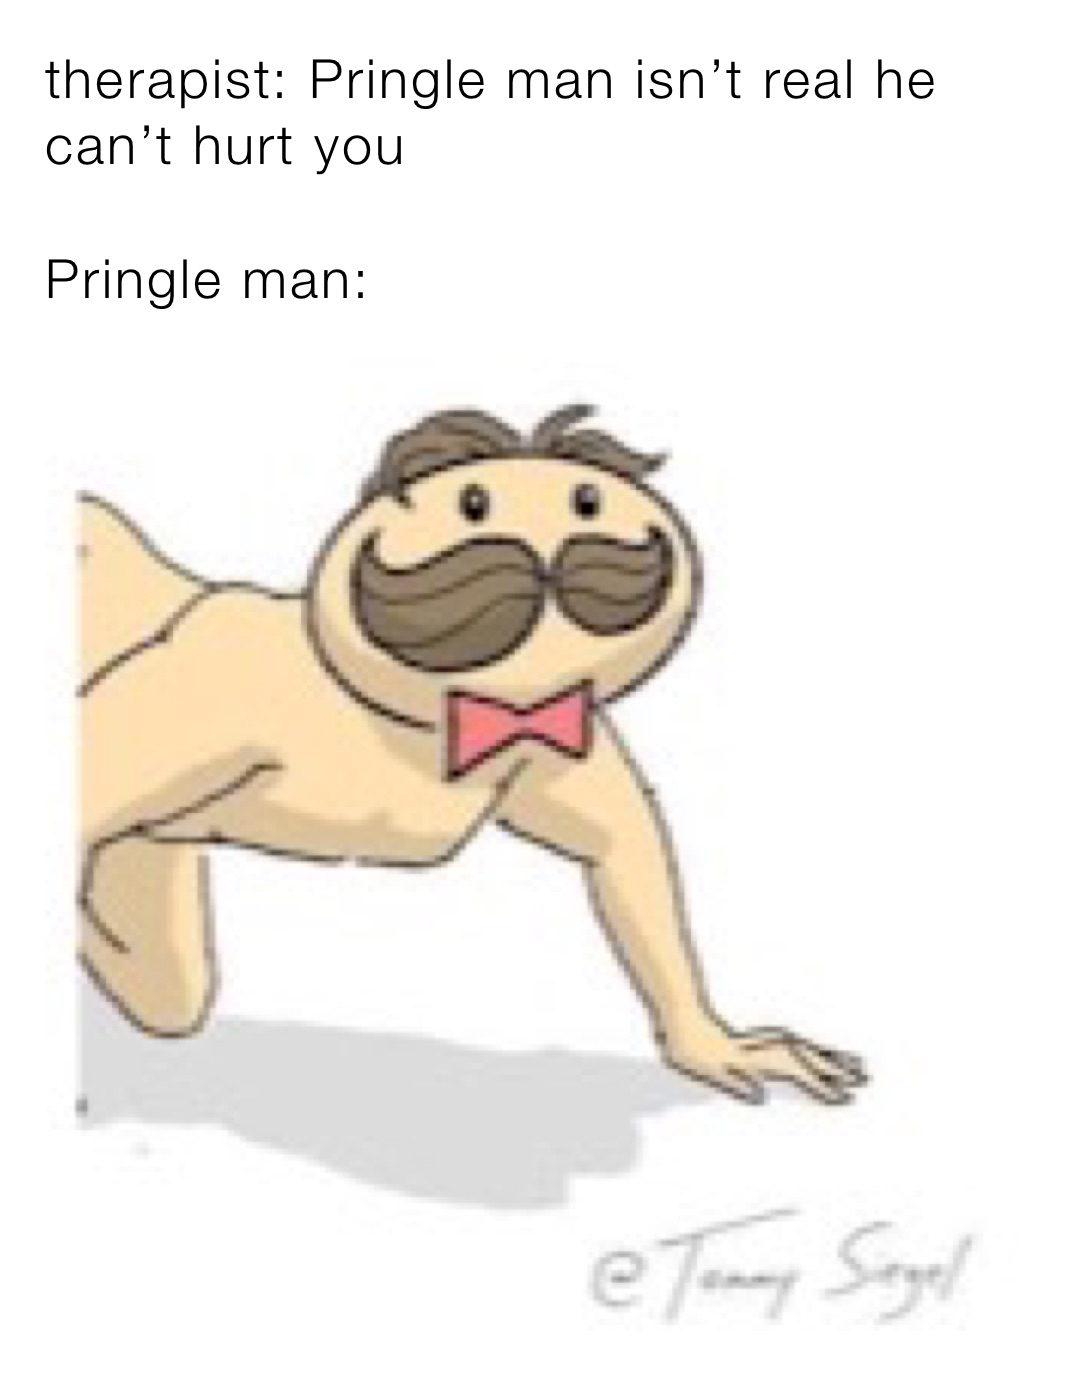 therapist: Pringle man isn’t real he can’t hurt you

Pringle man: 